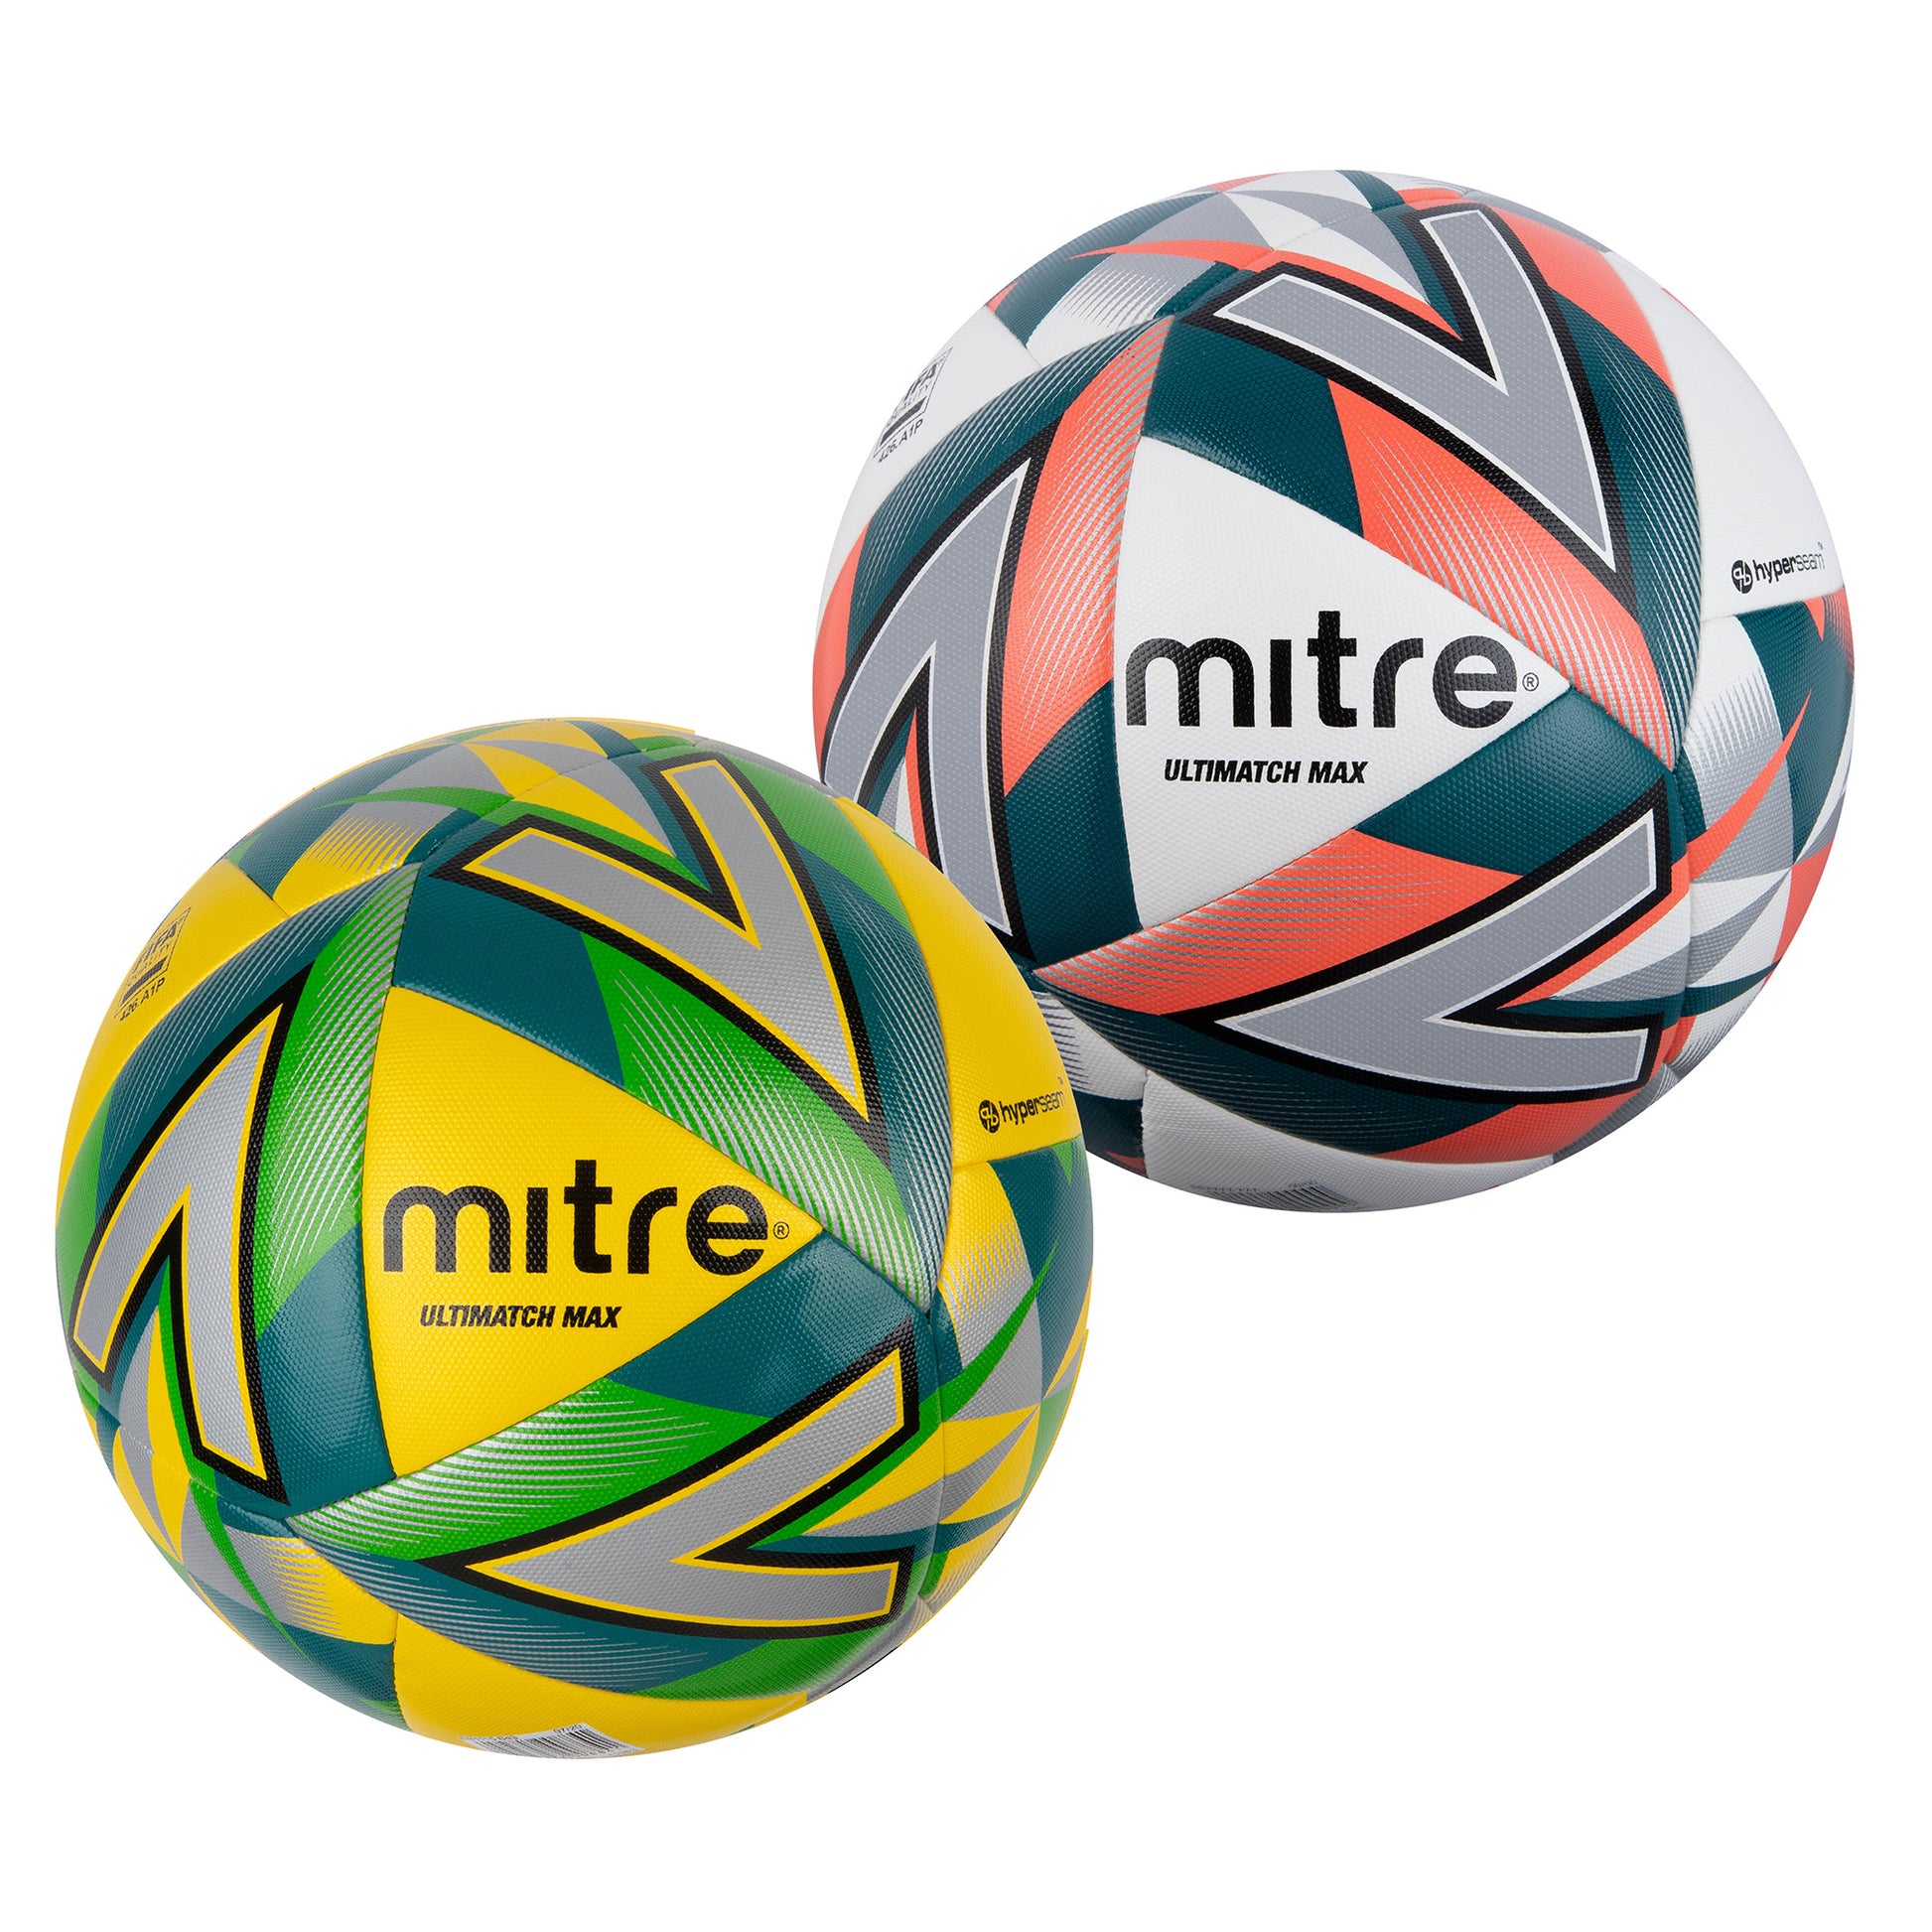 Mitre Ultimatch Max Match Ball - size 5